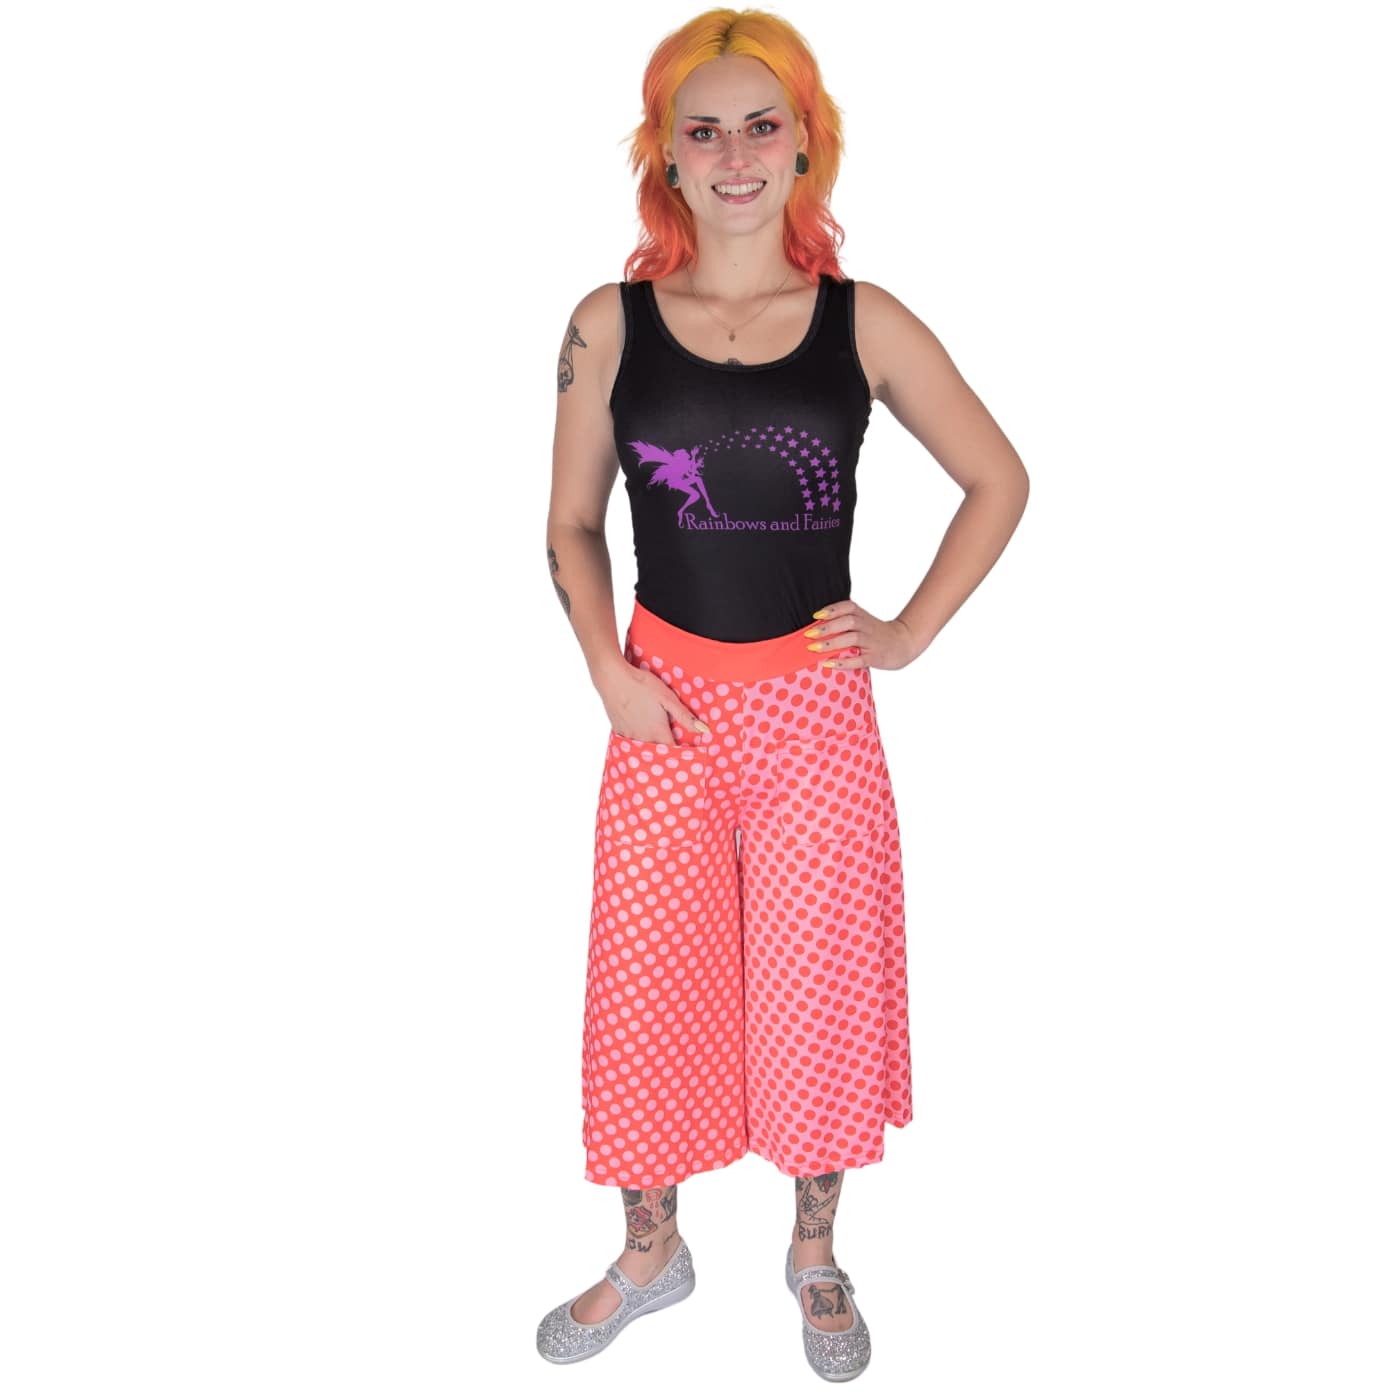 Blush Culottes by RainbowsAndFairies.com.au (Red Polka Dots - Pink Polka Dots - Pink & Red - 3 Quarter Pants - Wide Leg Pants - Vintage Inspired) - SKU: CL_CULTS_BLUSH_ORG - Pic-04